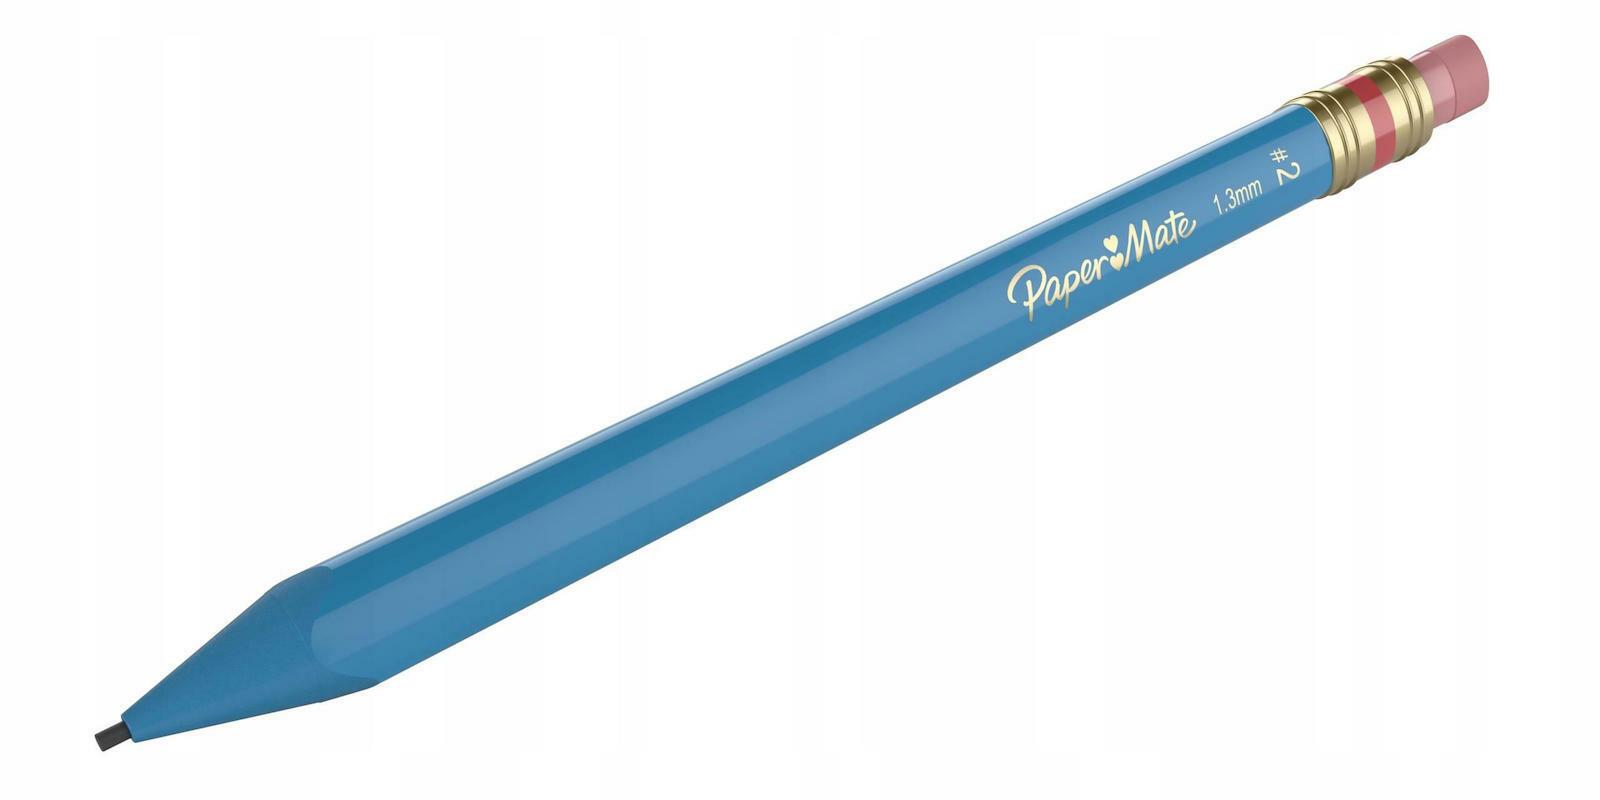 Paper Mate Handwriting 1.3mm Mechanical Pencils - Shop Pencils at